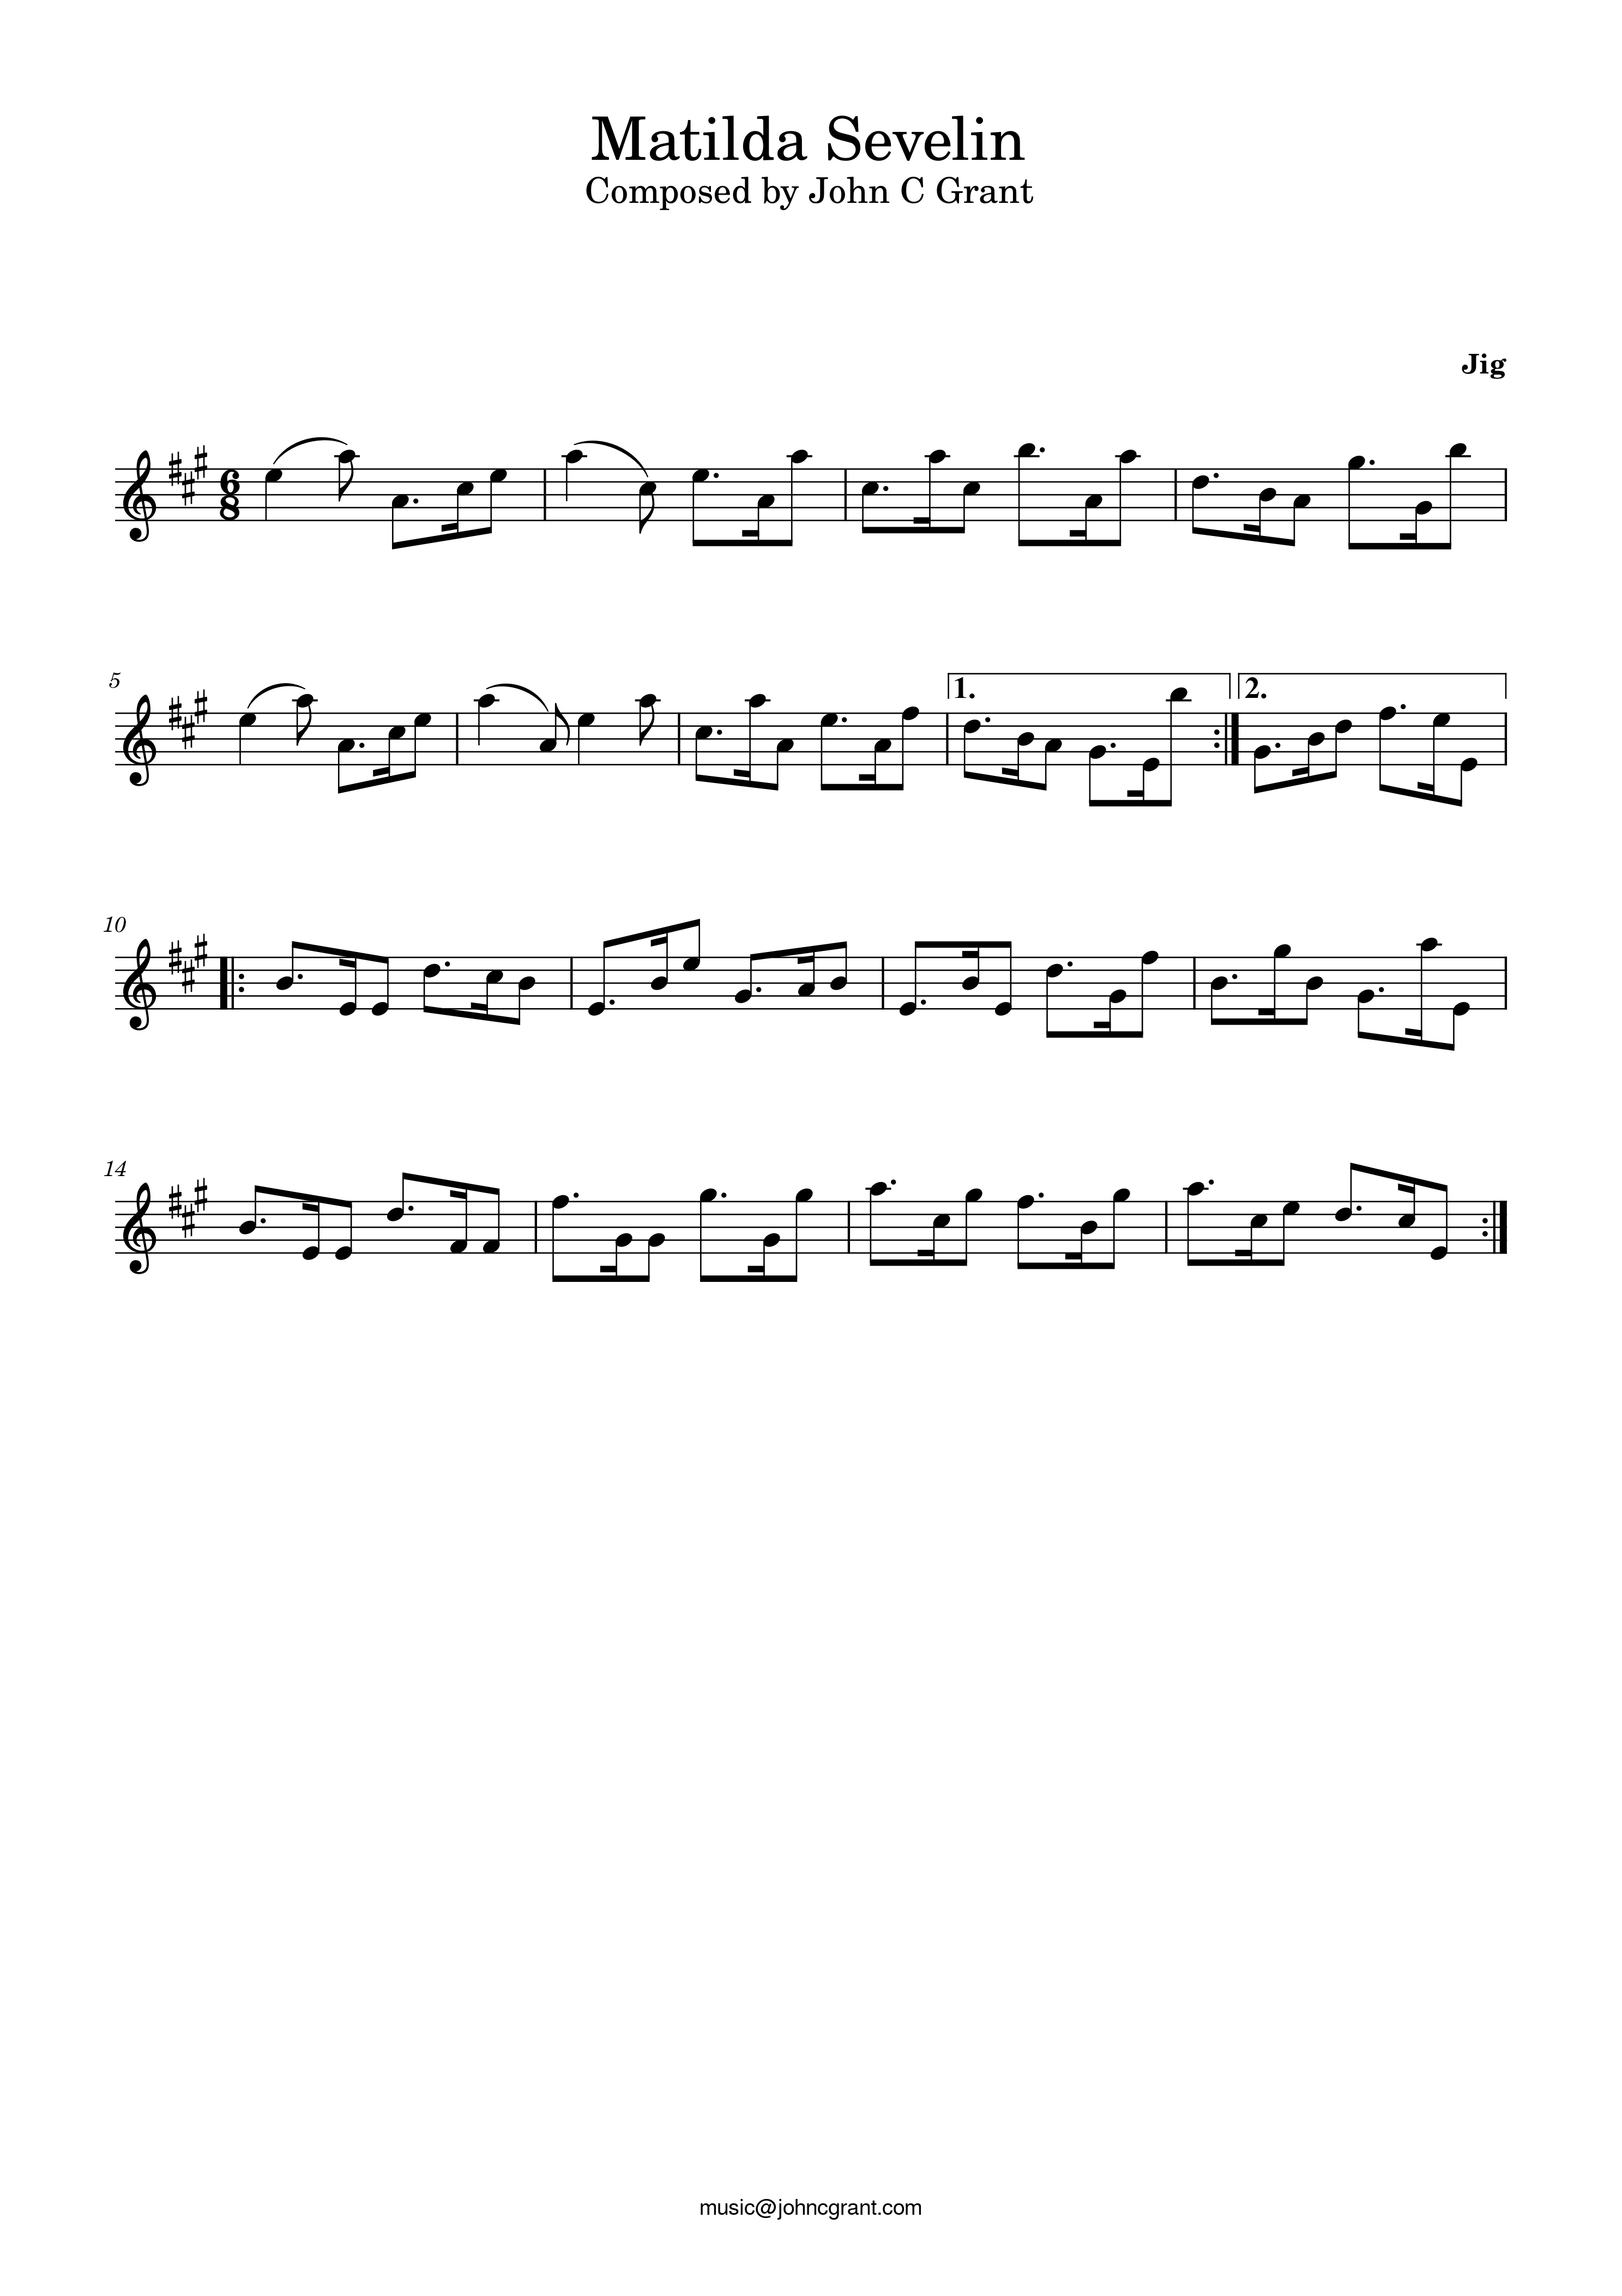 Matilda Sevelin - Composed by John C Grant (https://johncgrant.com). Traditional composer from Kilmarnock, Ayrshire, Scotland.